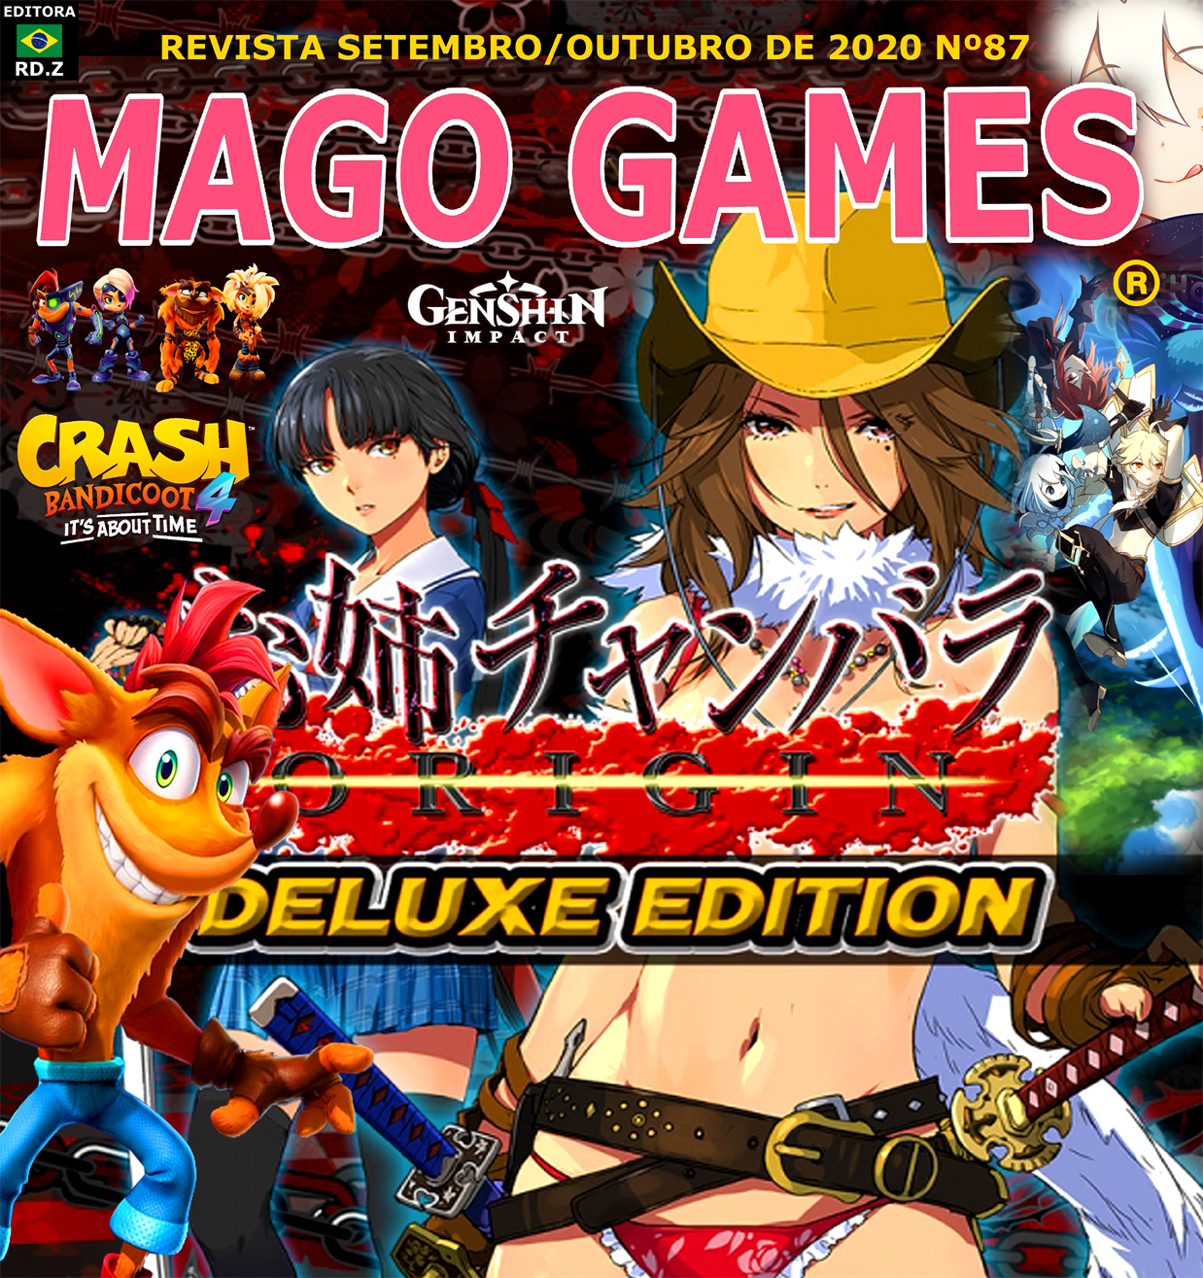 Mago Games New Generation